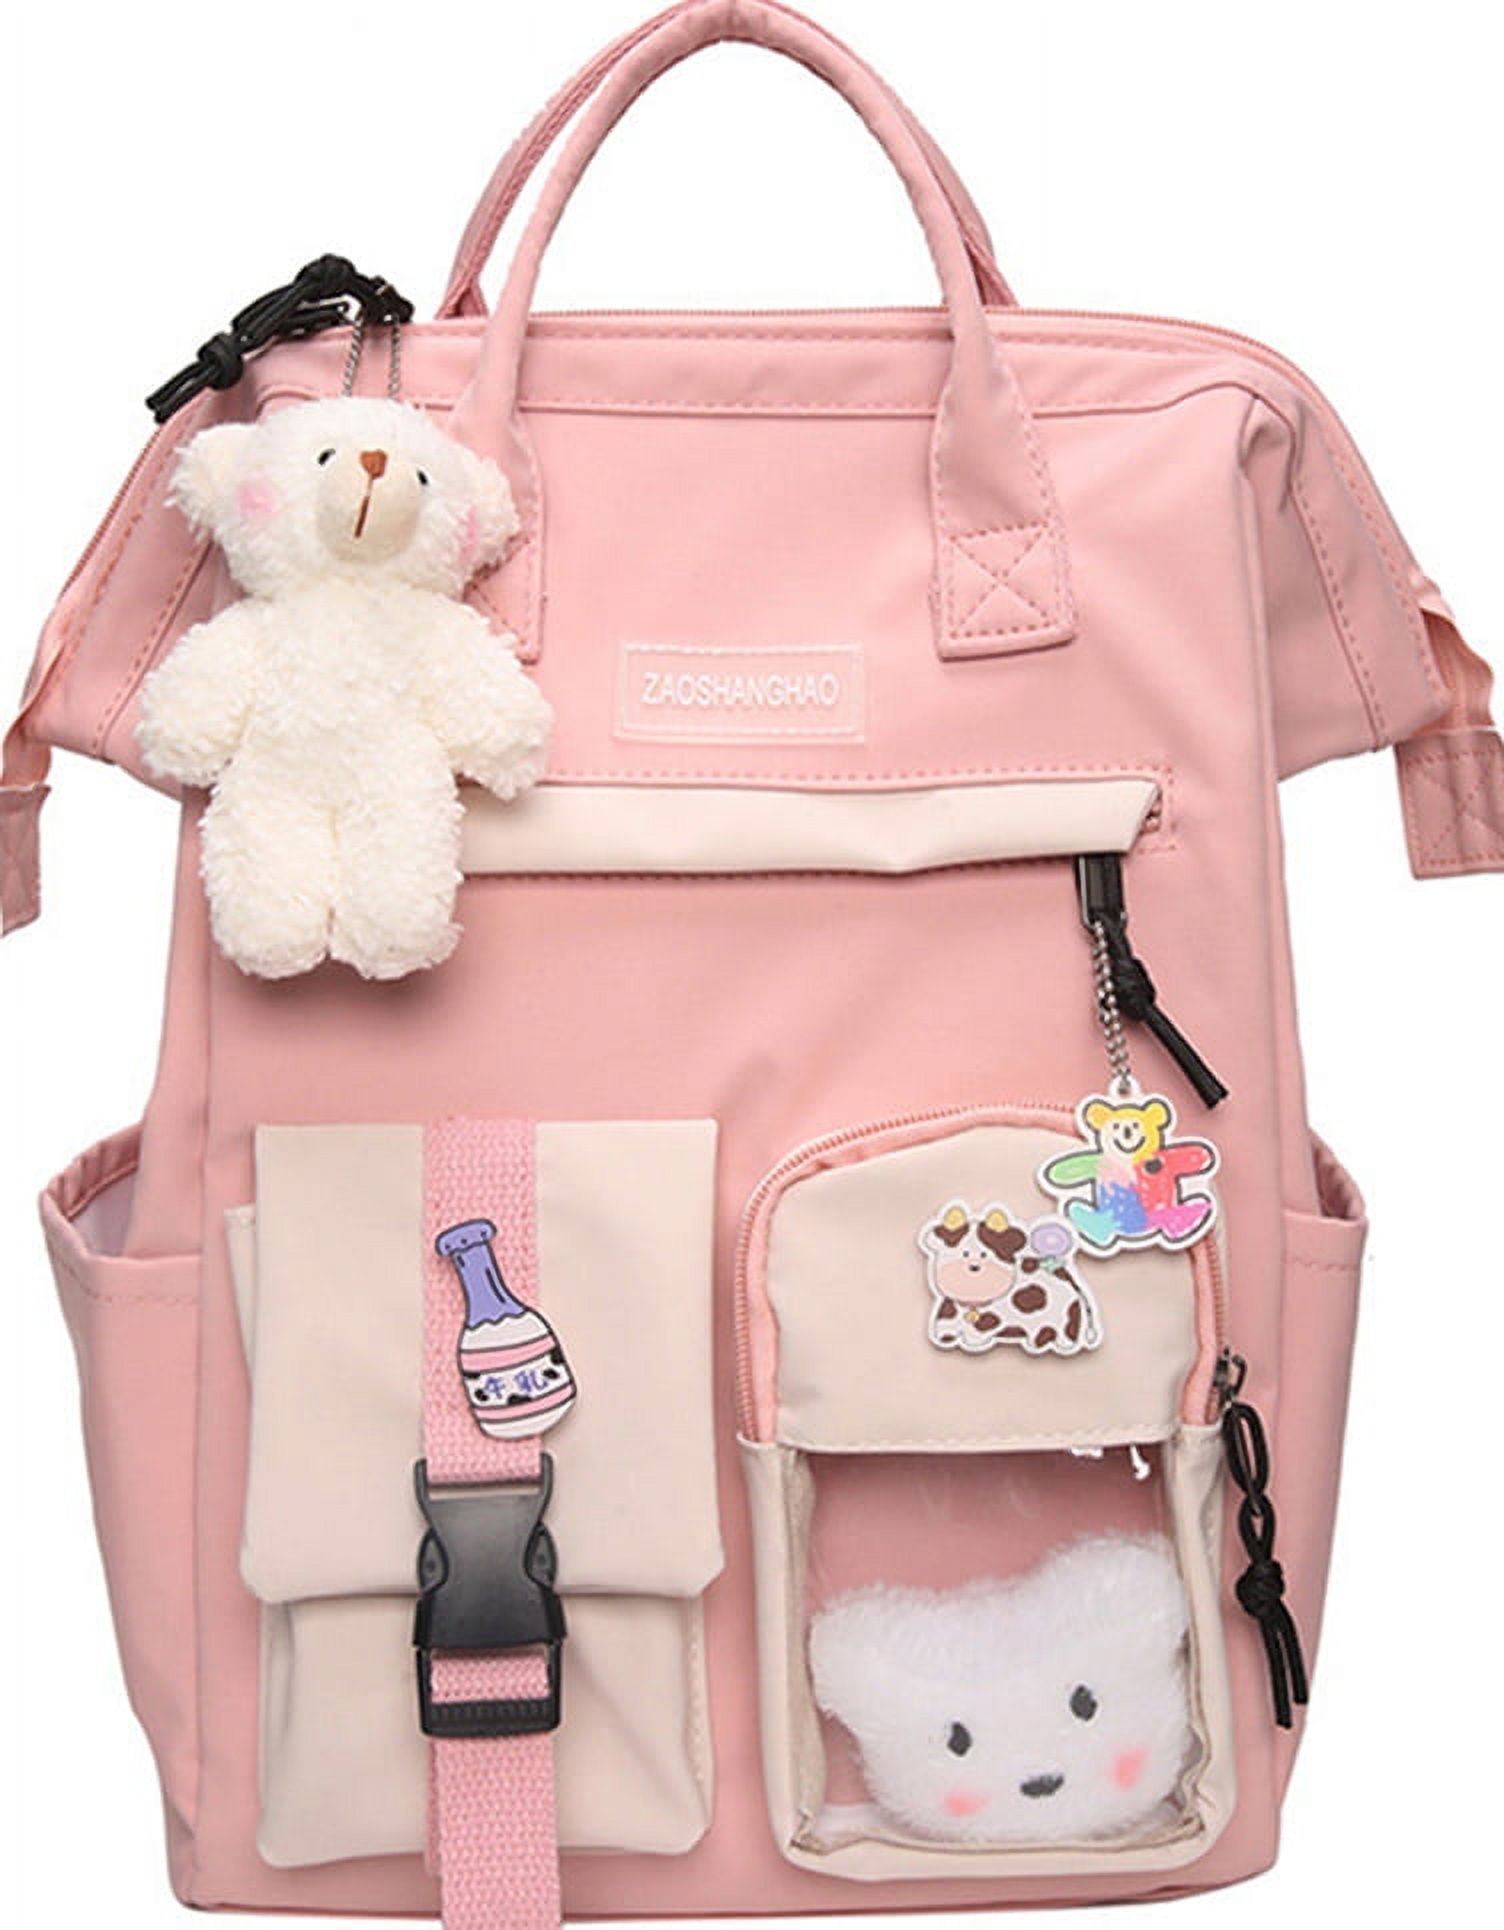 Kawaii Backpack With Kawaii Pin And Accessories Backpack Cute Backpack Cute  Kawaii Backpack For School